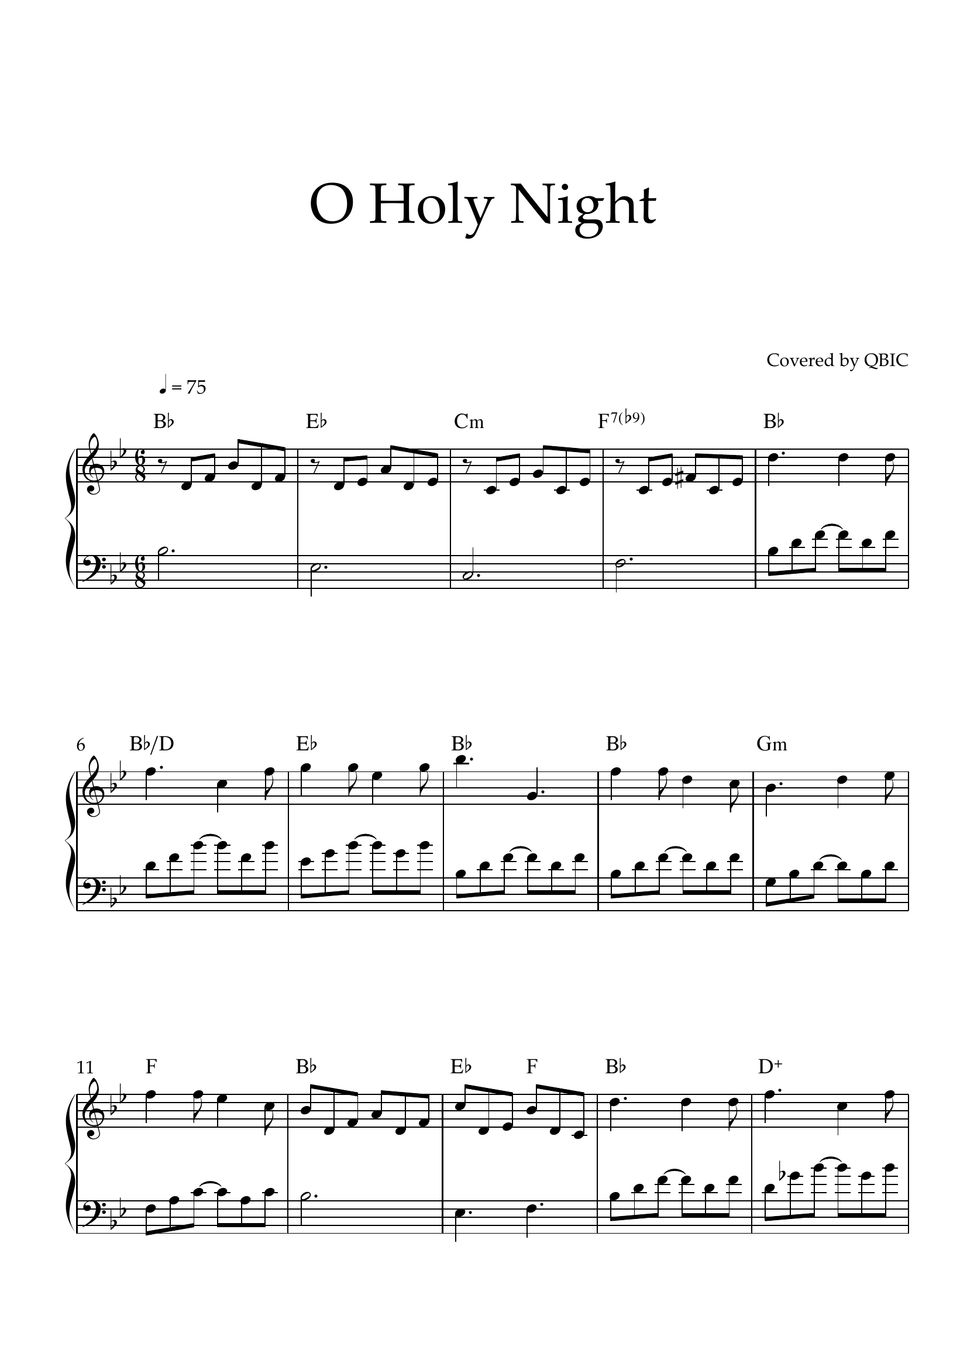 QBIC - O Holy Night Sheet